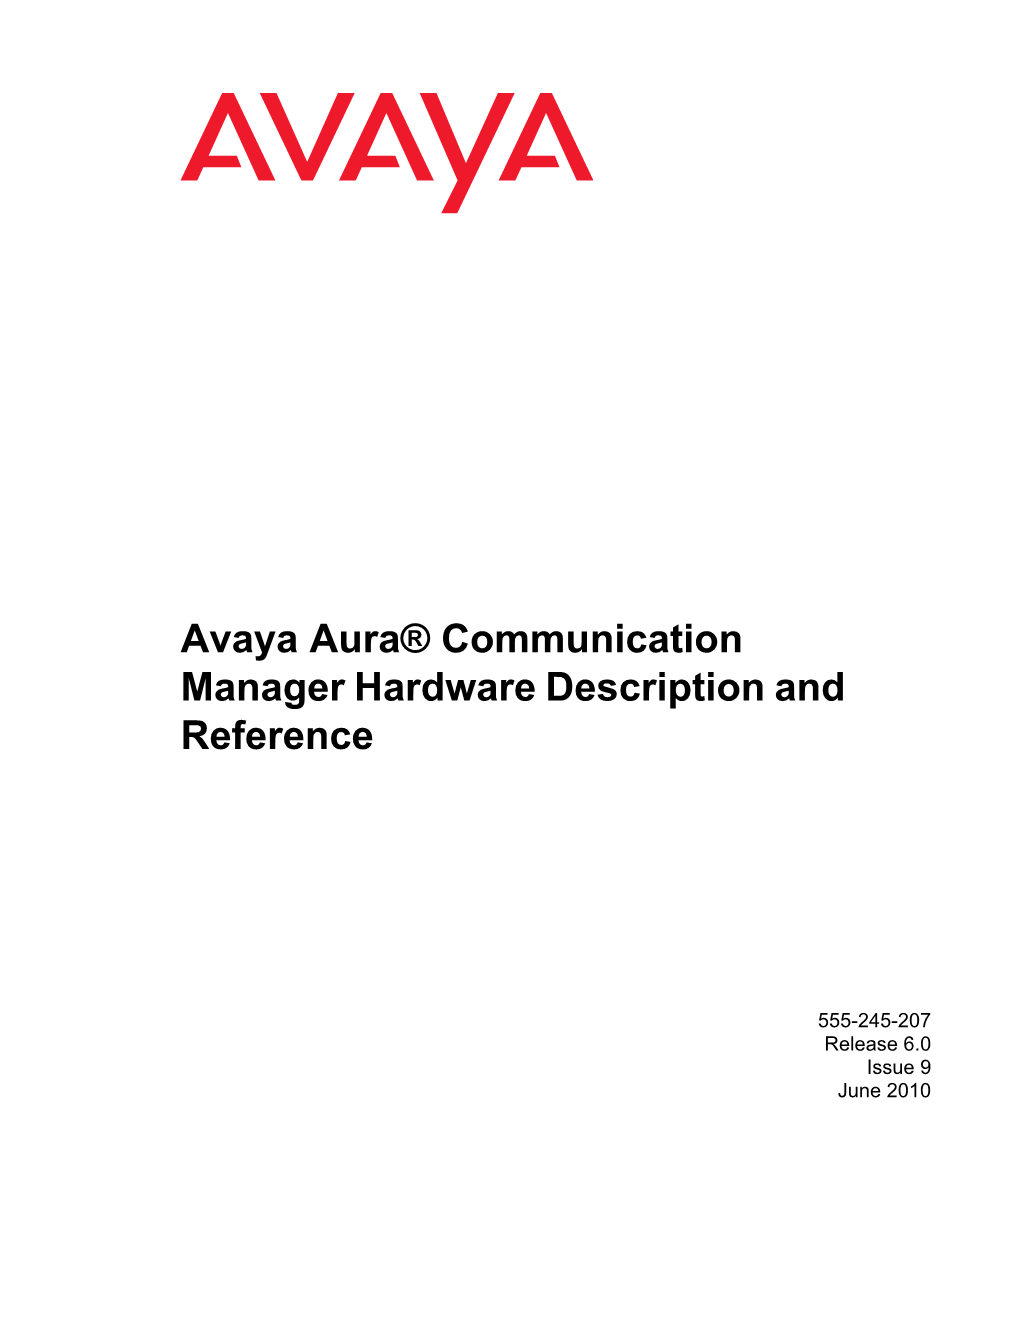 Avaya Aura® Communication Manager Hardware Description and Reference